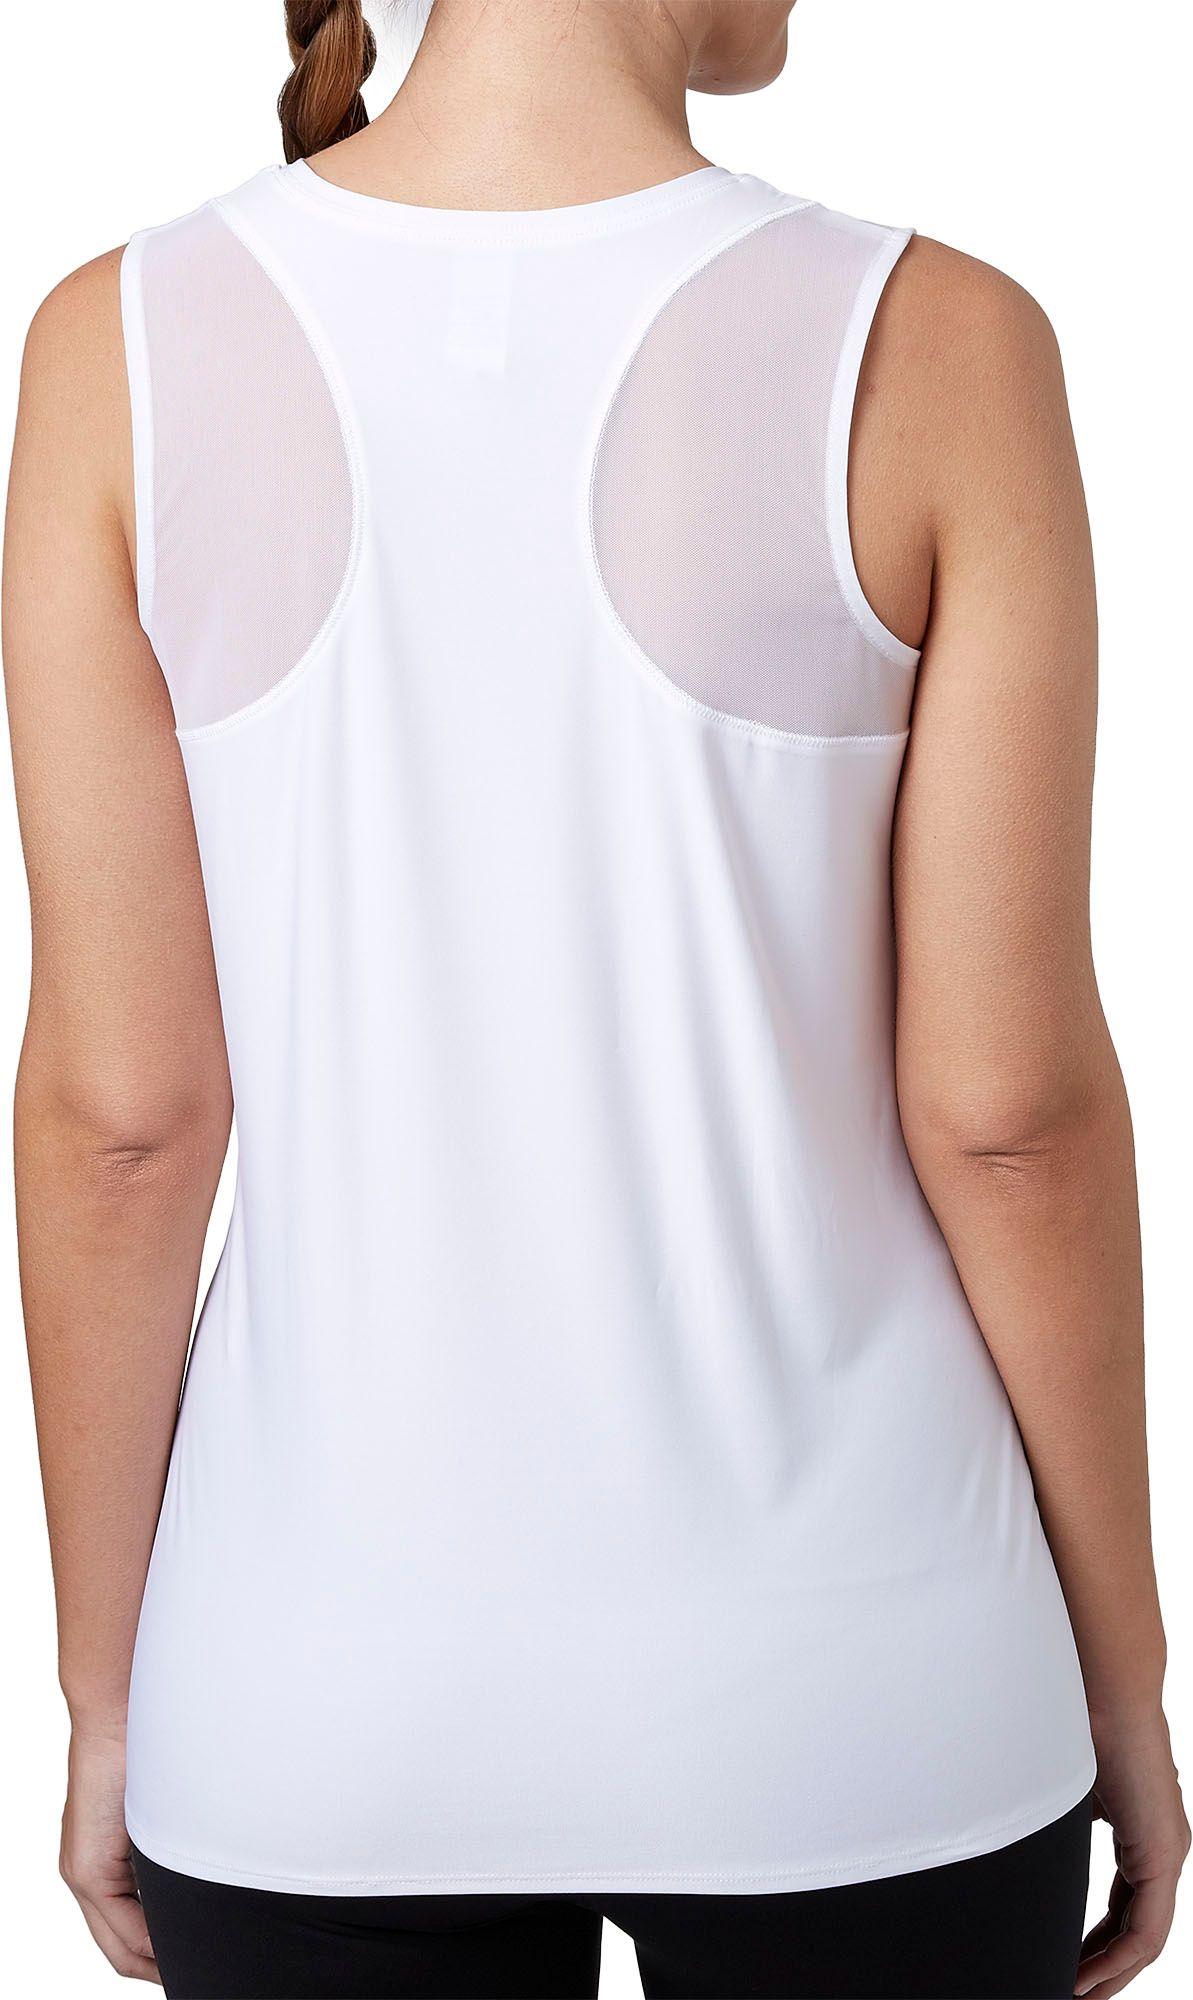 reebok women's performance mesh muscle tank top